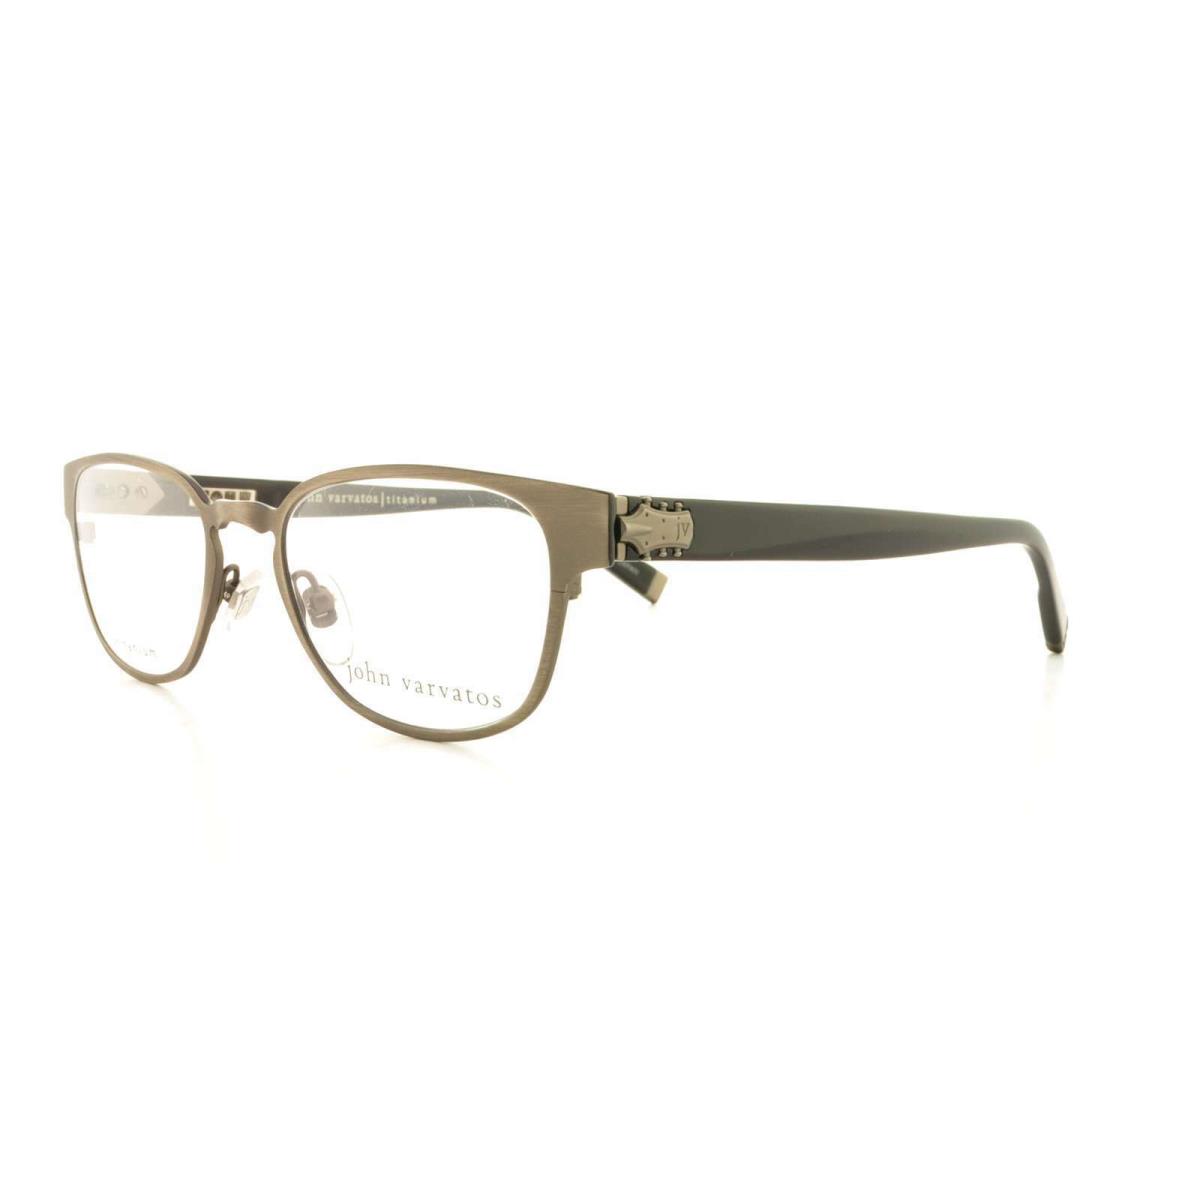 John Varvatos Eyeglasses JV V141 45mm Gunmetal Metal / Acetate - Made in Japan